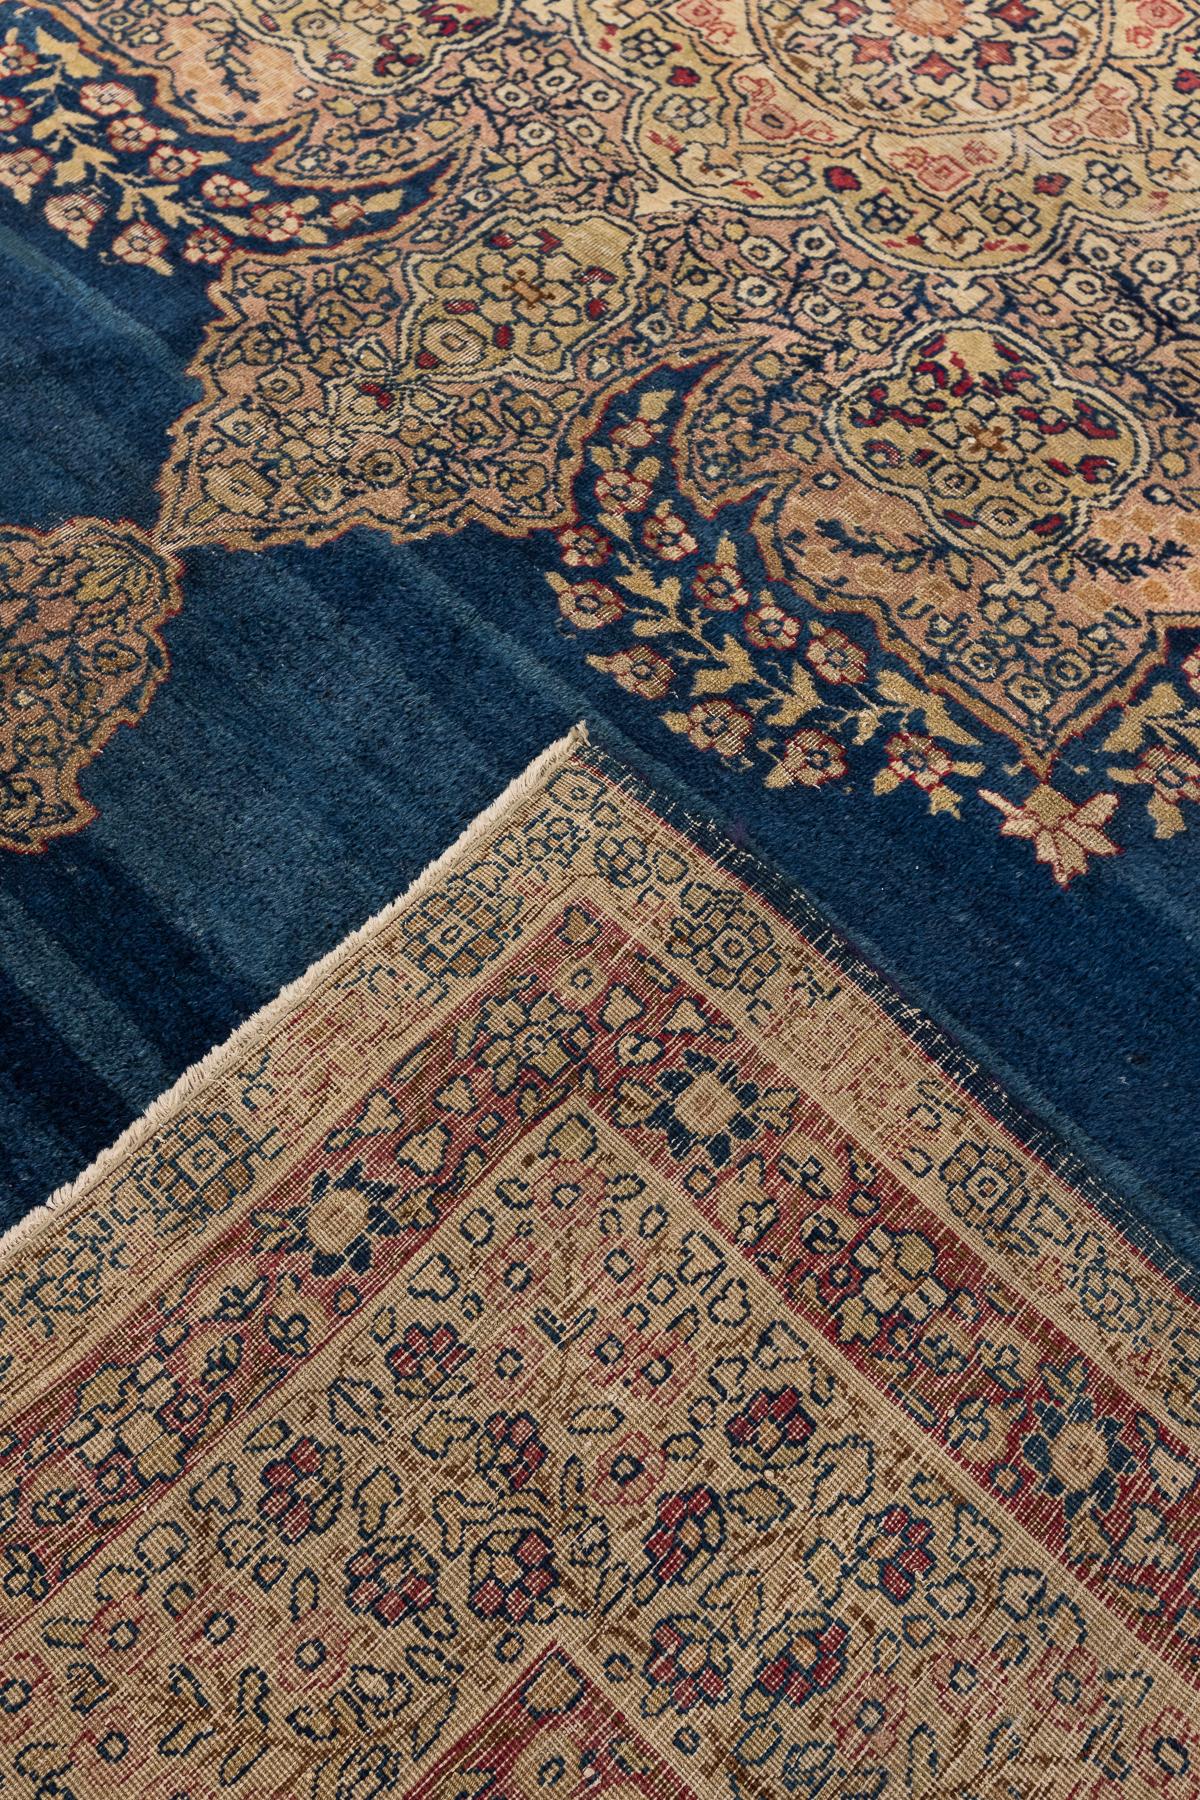 Antique Persian Kerman Carpet In Good Condition For Sale In Barueri, SP, BR